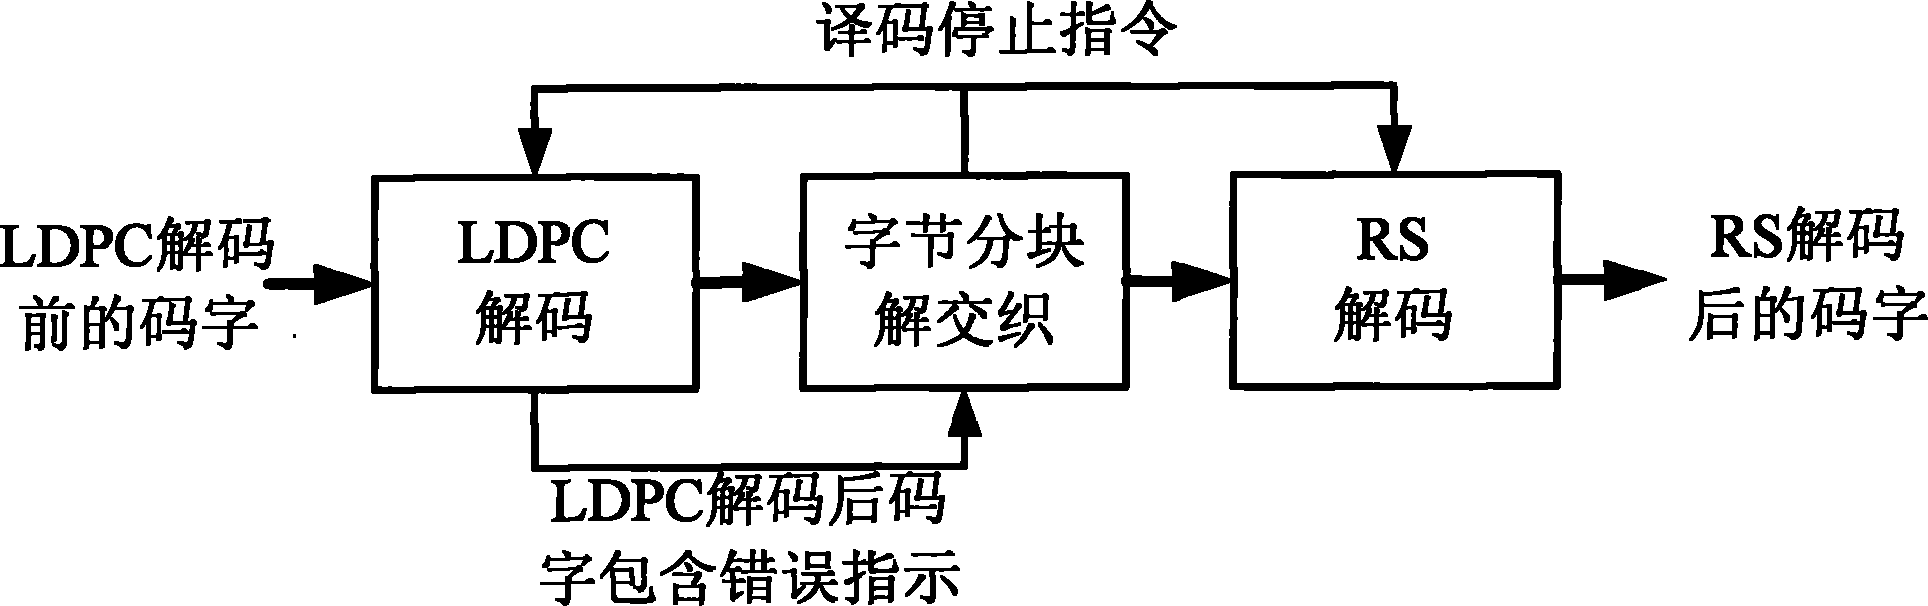 CMMB receiver decoding method